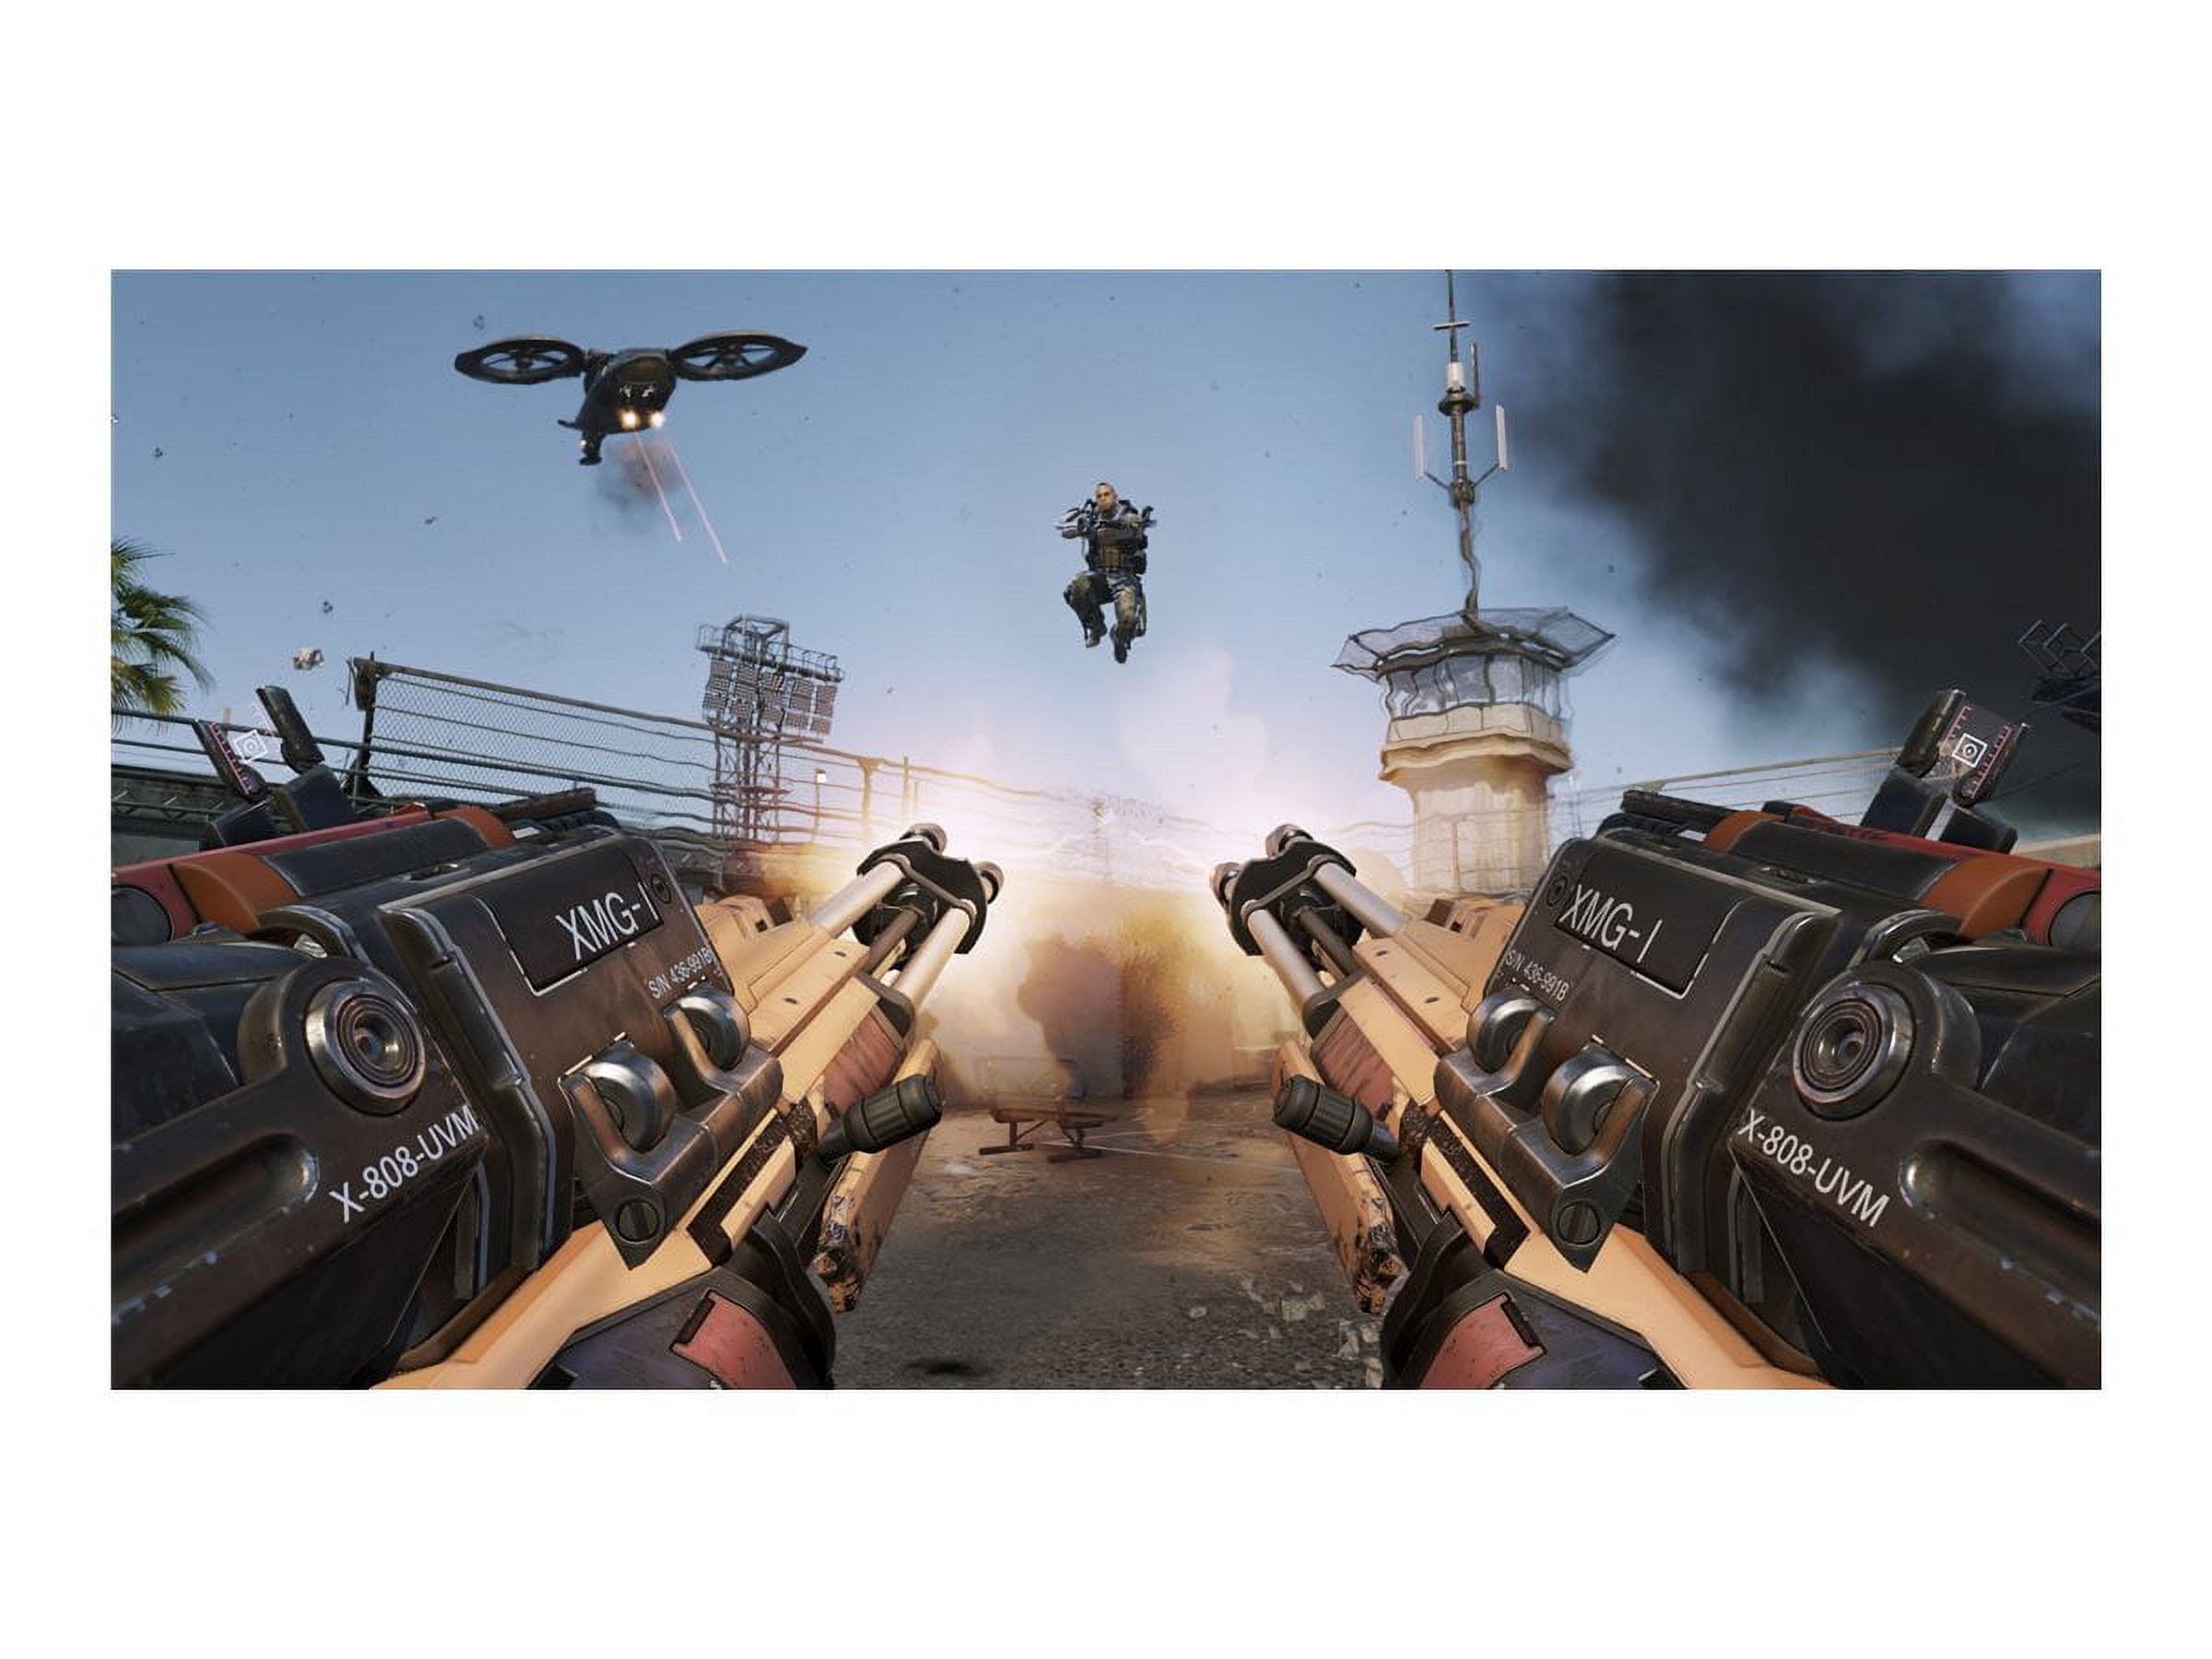 Buy Call of Duty®: Advanced Warfare Gold Edition